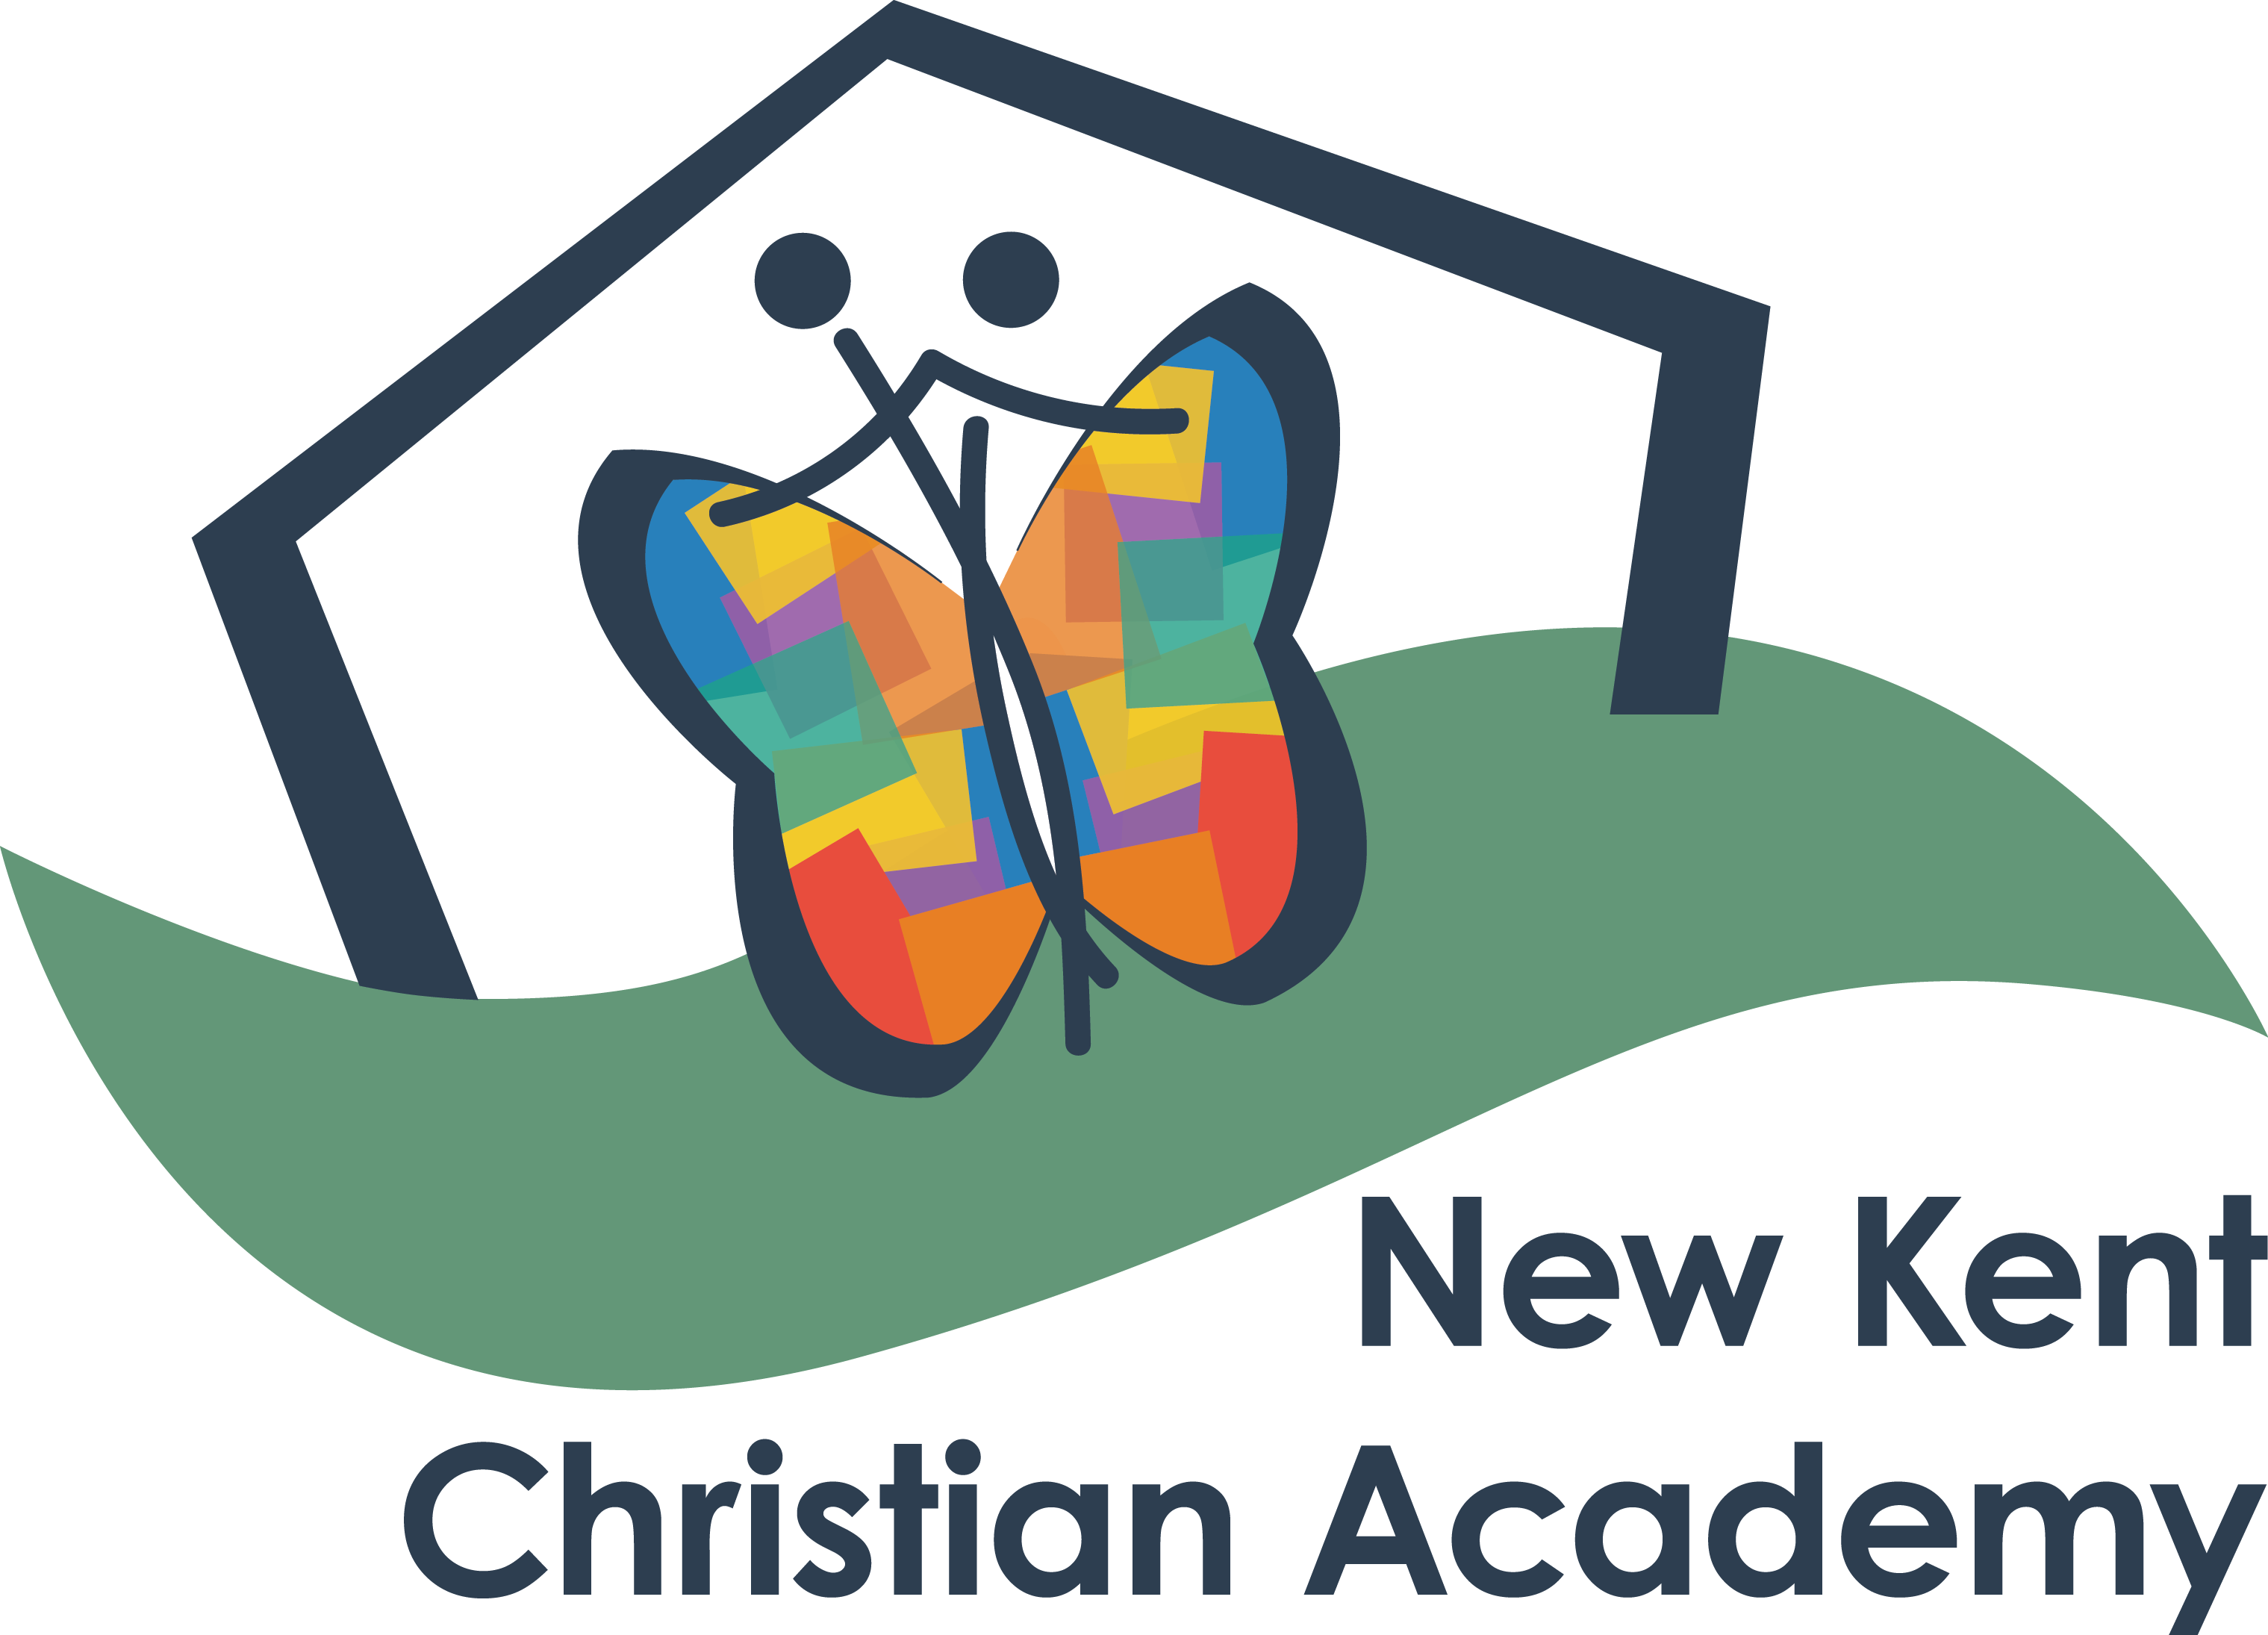 Quality Christian Education - New Kent Christian Academy (3038x2190)